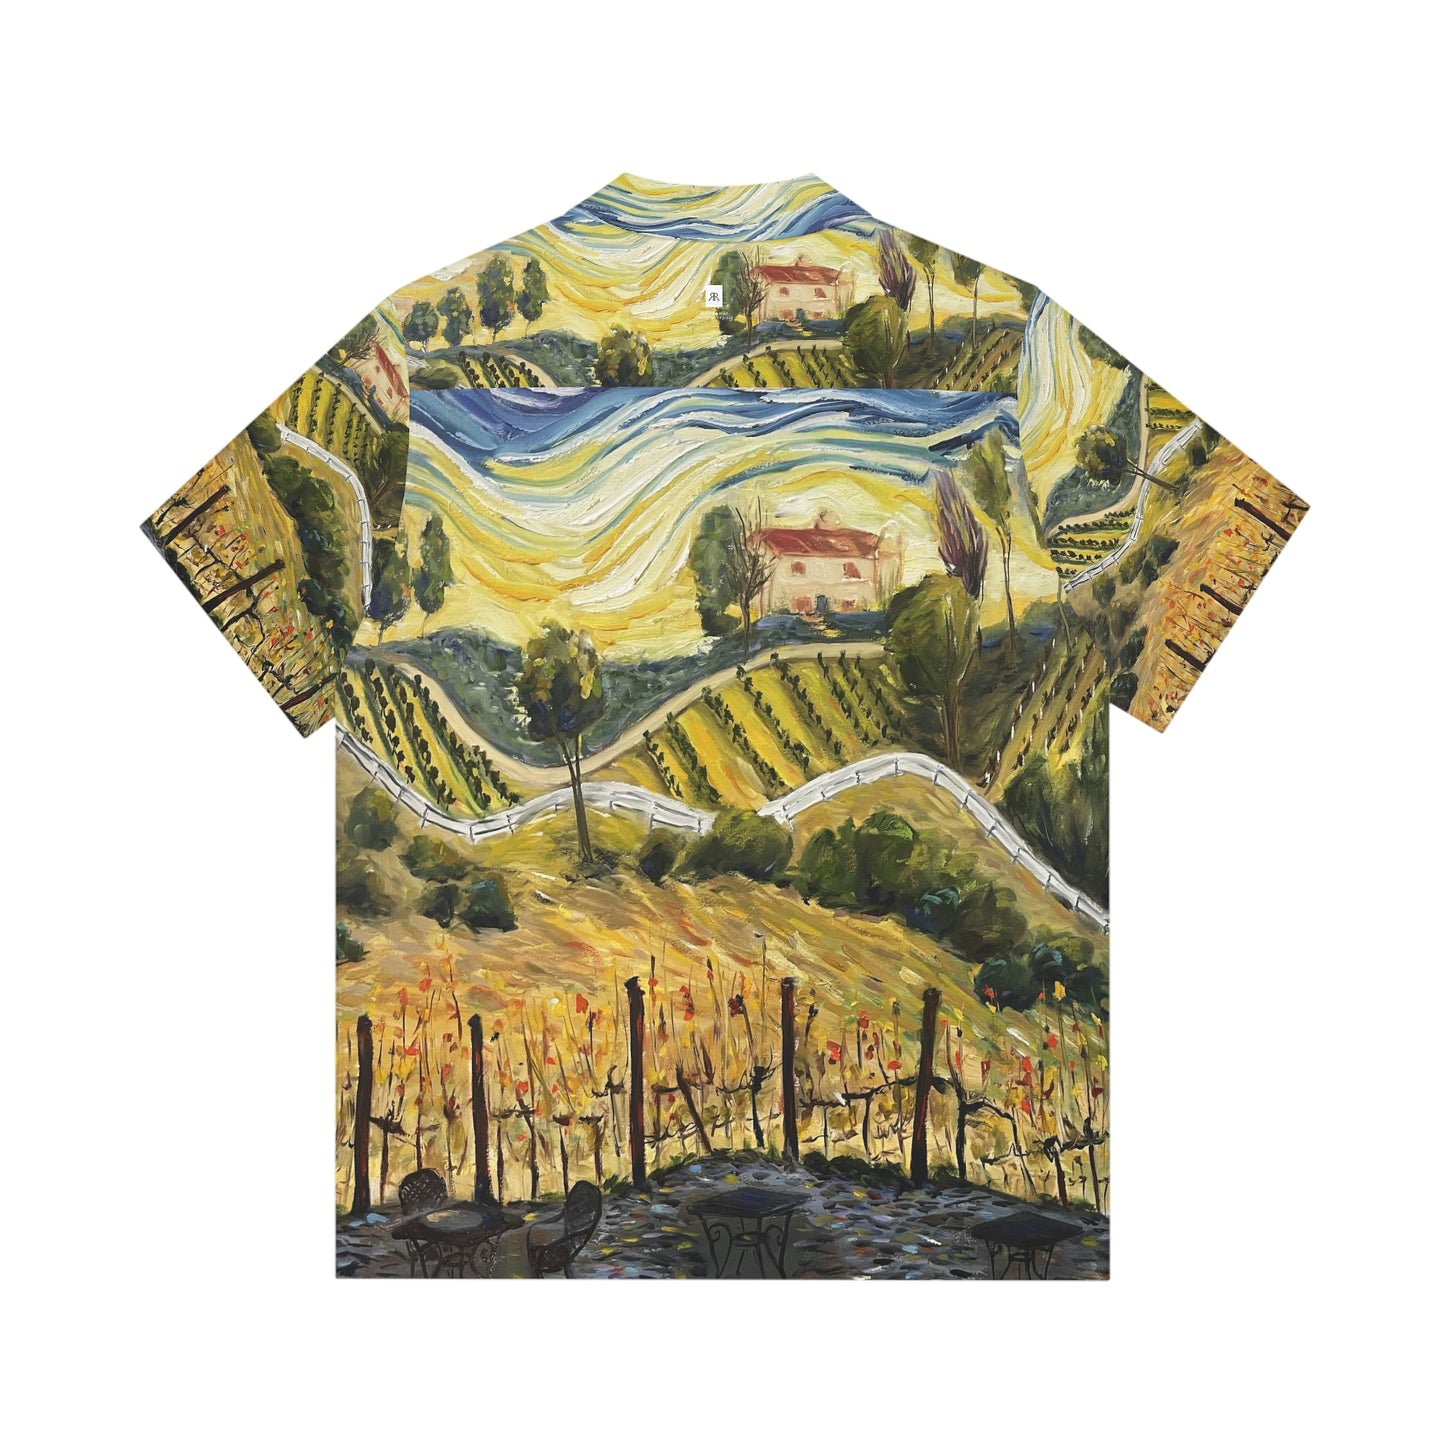 Sunset at the Villa Original GBV Winery Temecula Landscape Men's Hawaiian Shirt